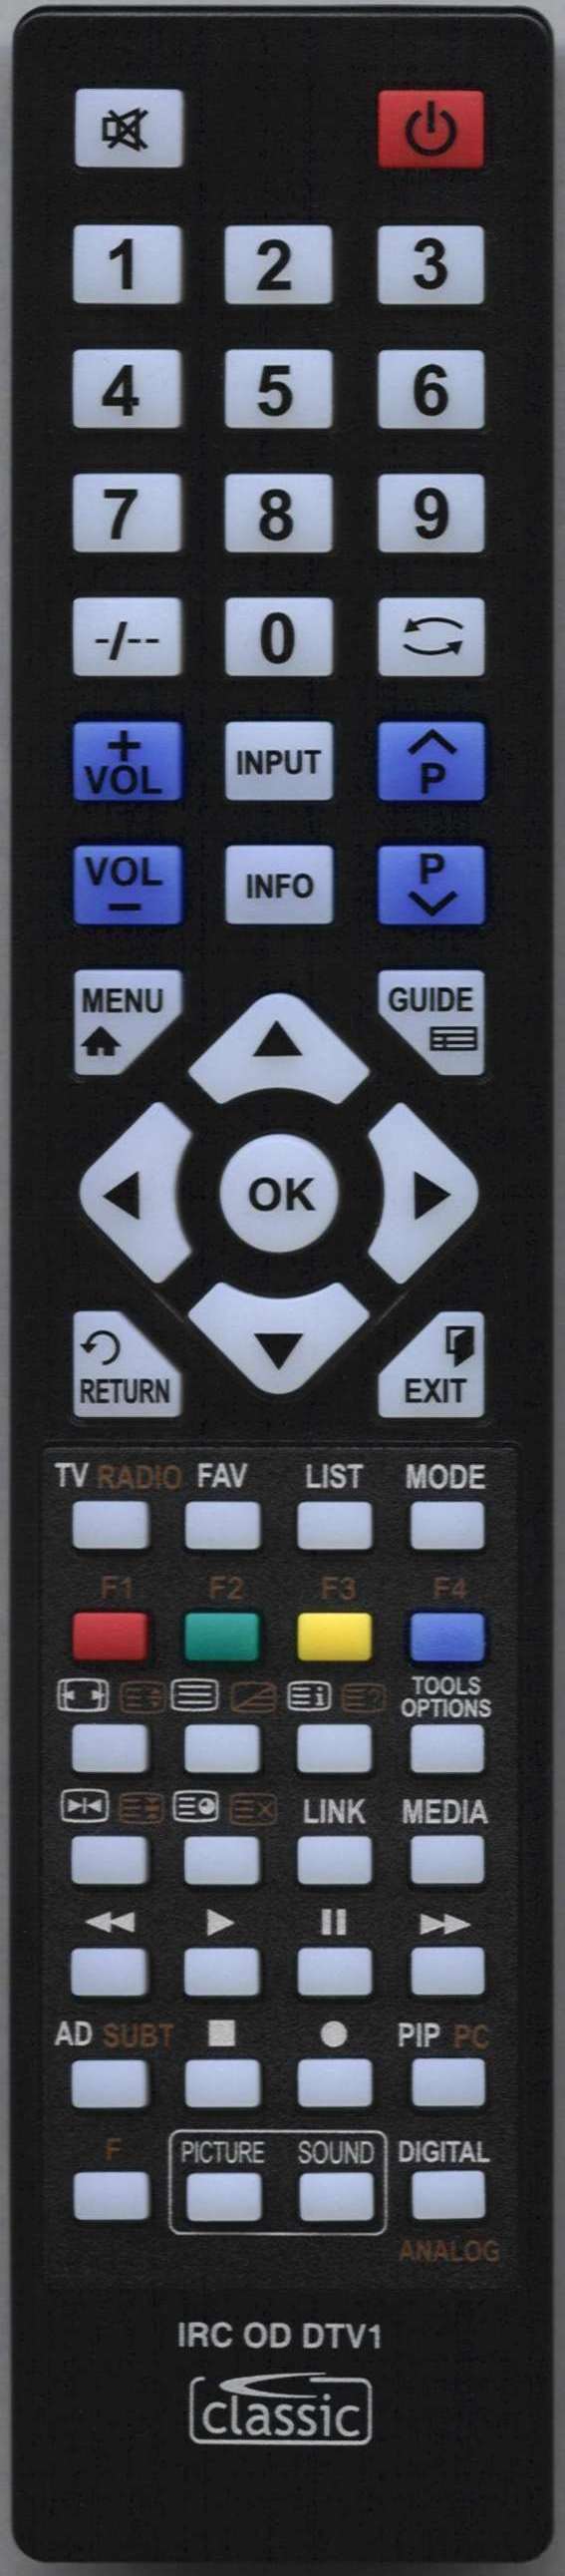 UMC L22/01-TCD-UK Remote Control